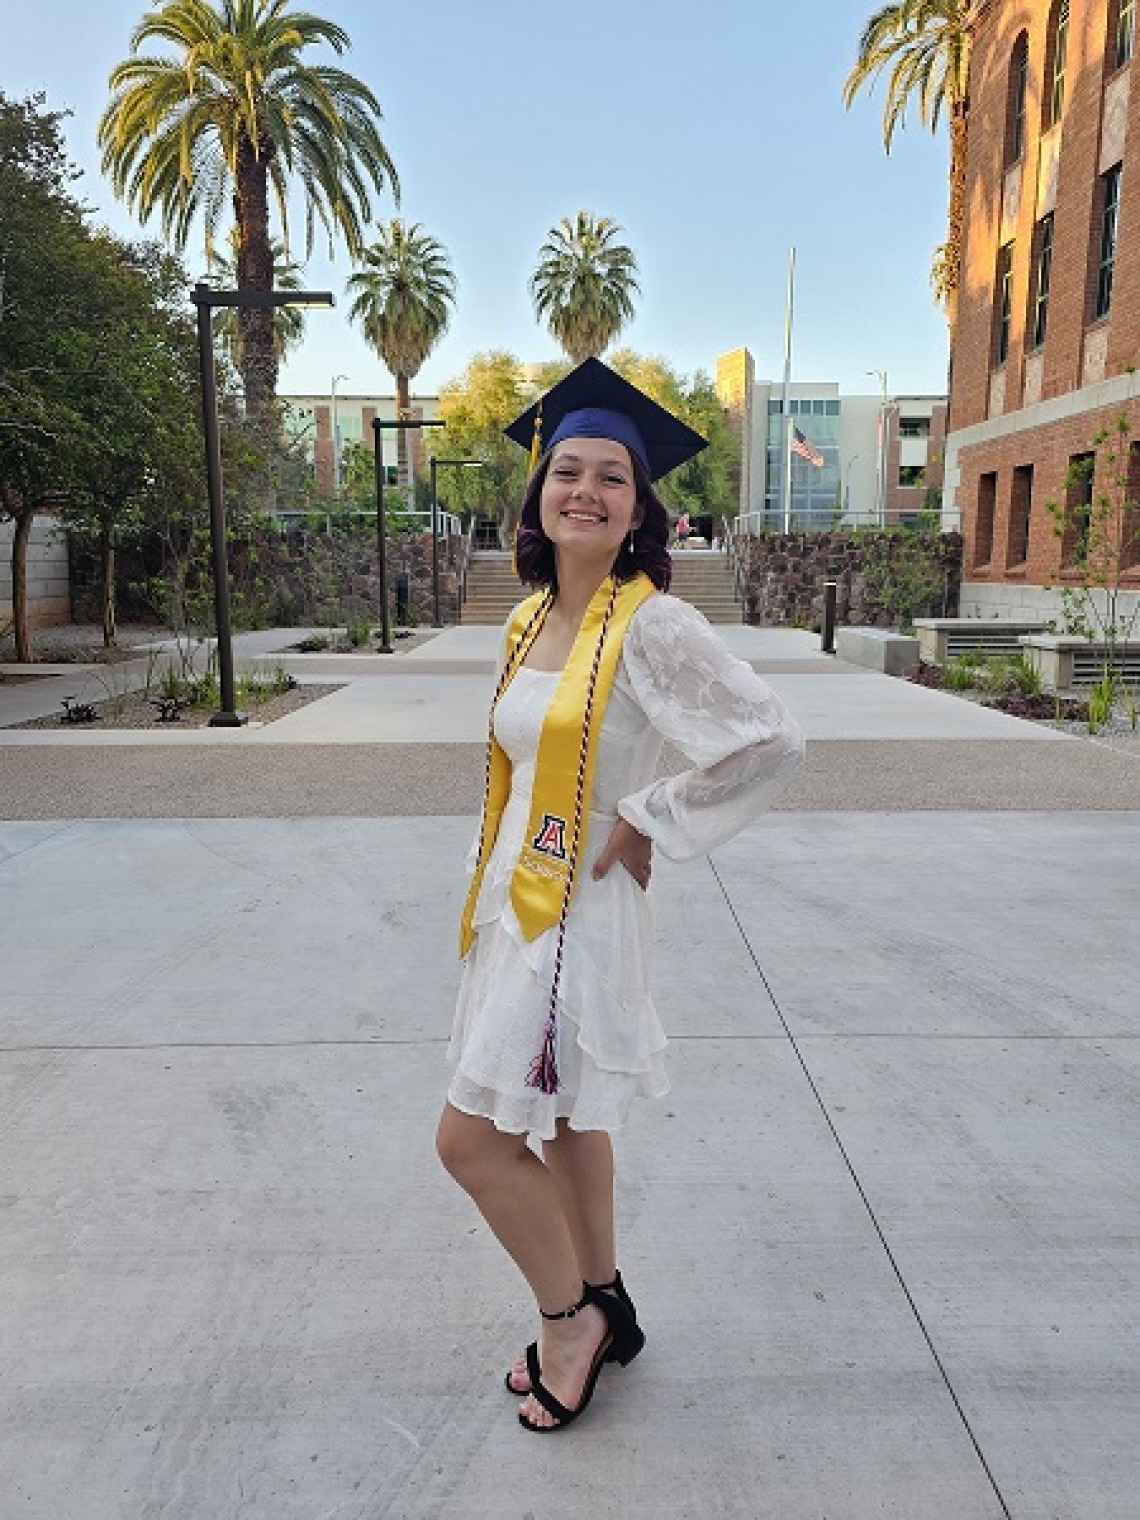 Elizabeth Harper in graduation cap